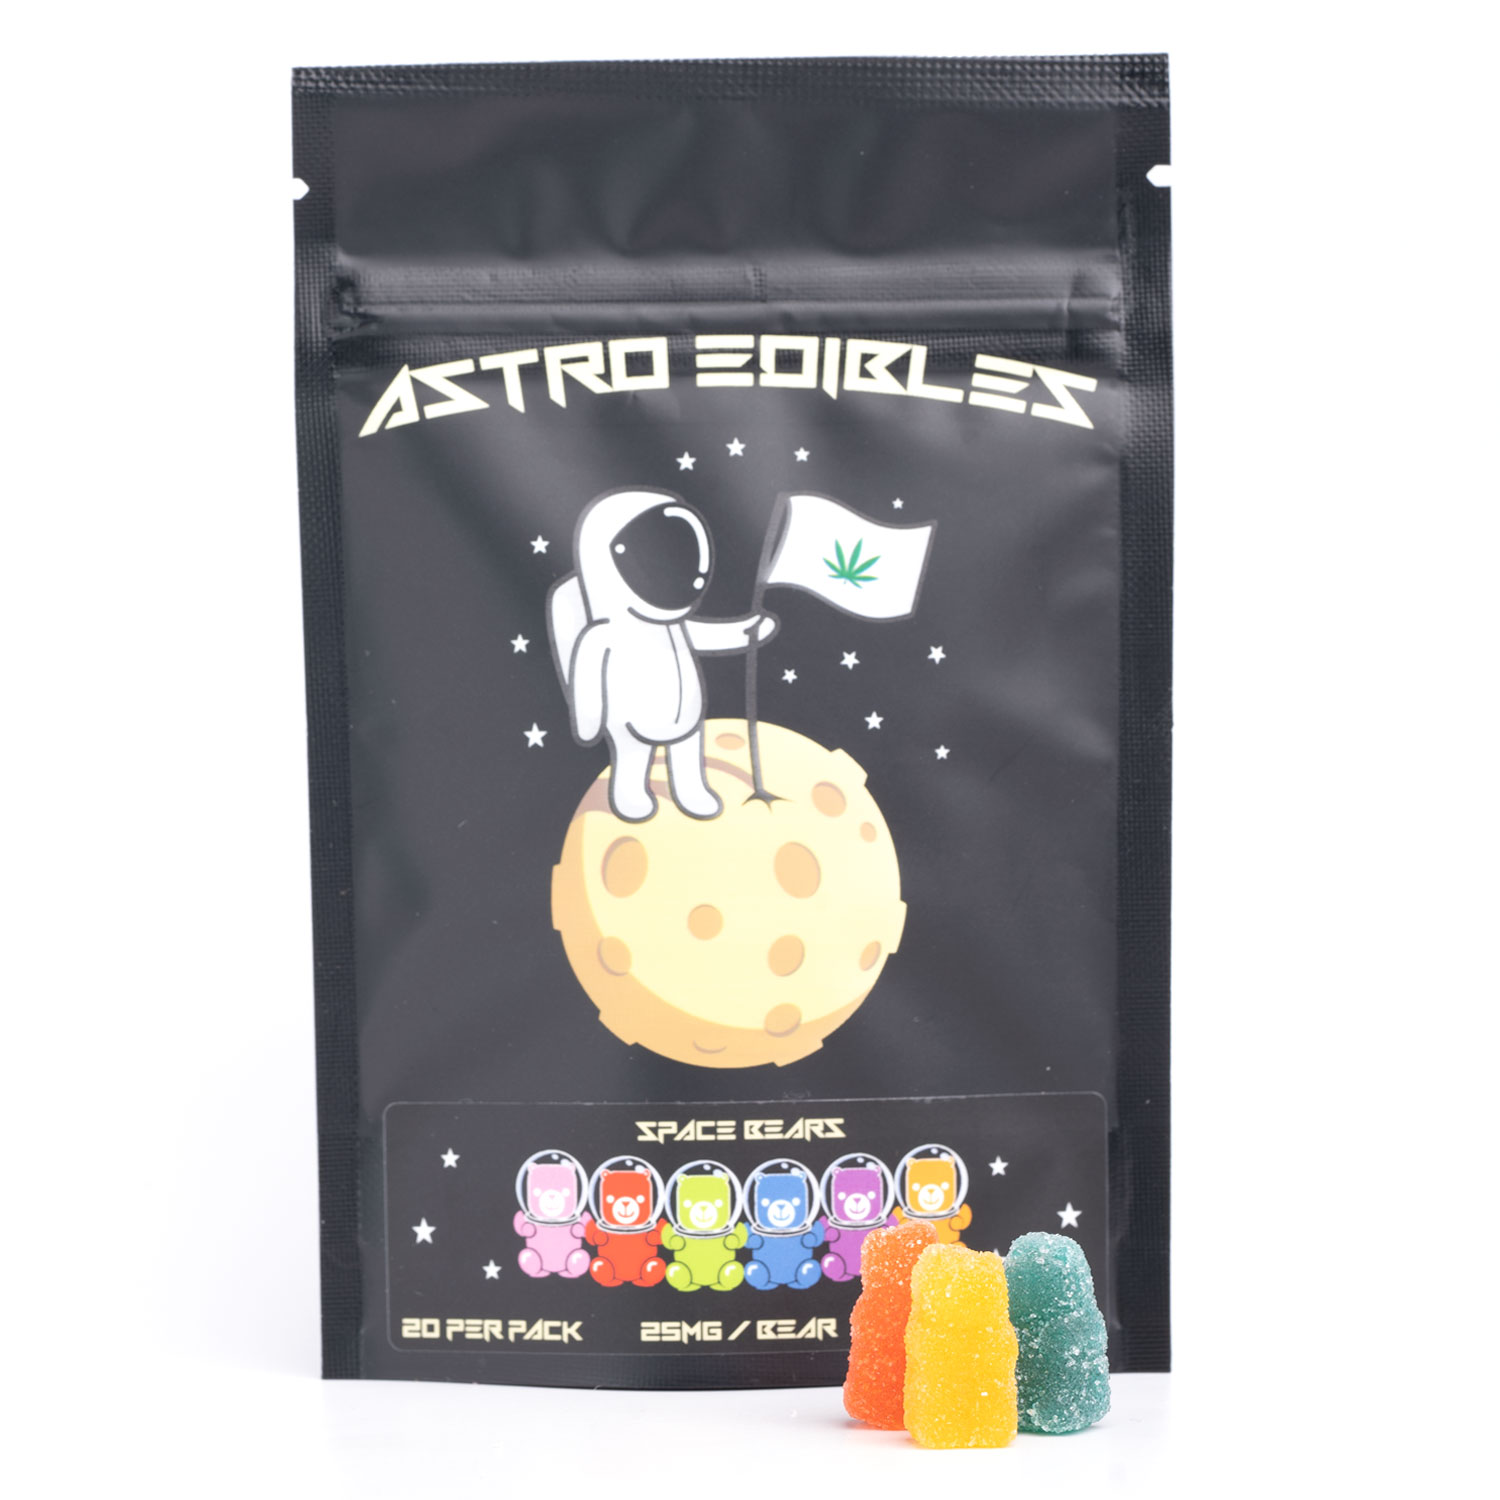 500mg Astro Space Bears